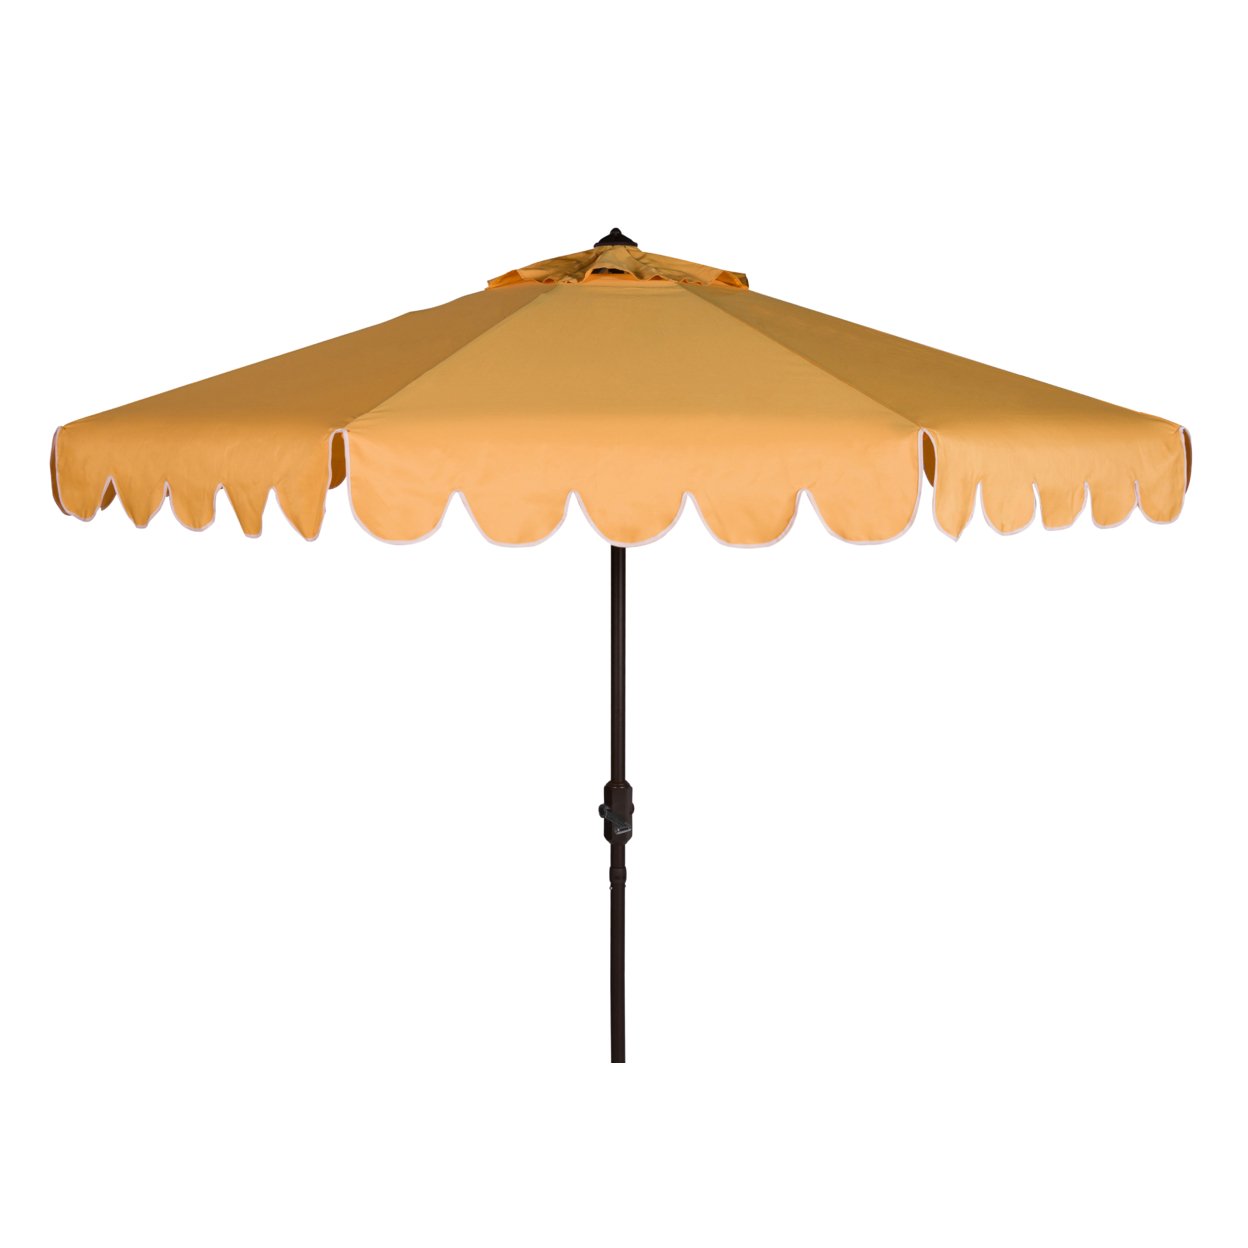 SAFAVIEH Outdoor Collection Venice Single Scallop 9-Foot Umbrella Yellow/White